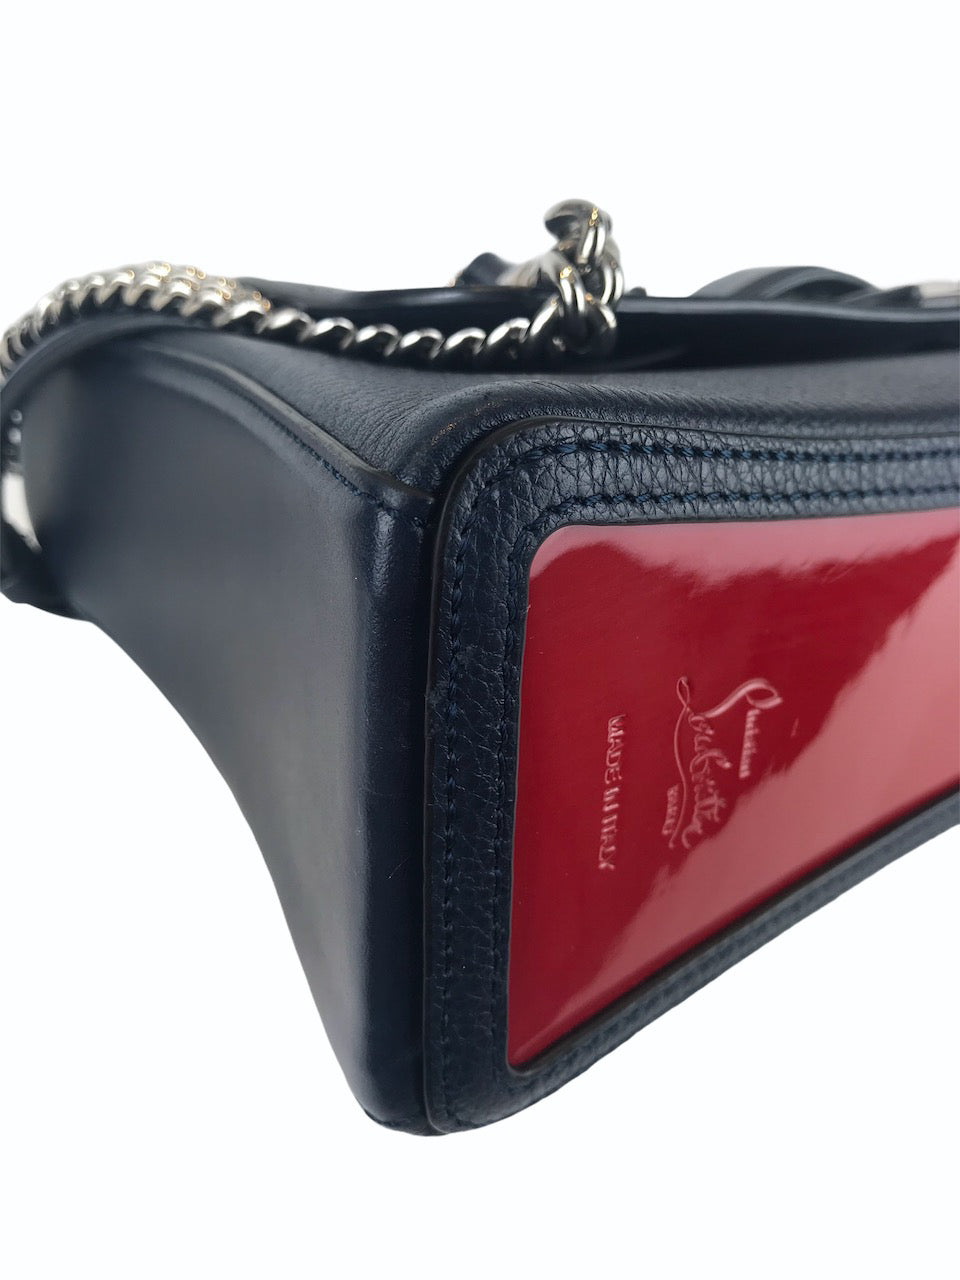 Christian Louboutin Navy Leather "Ruby Lou" Love Shoulder Bag - Siopaella Designer Exchange